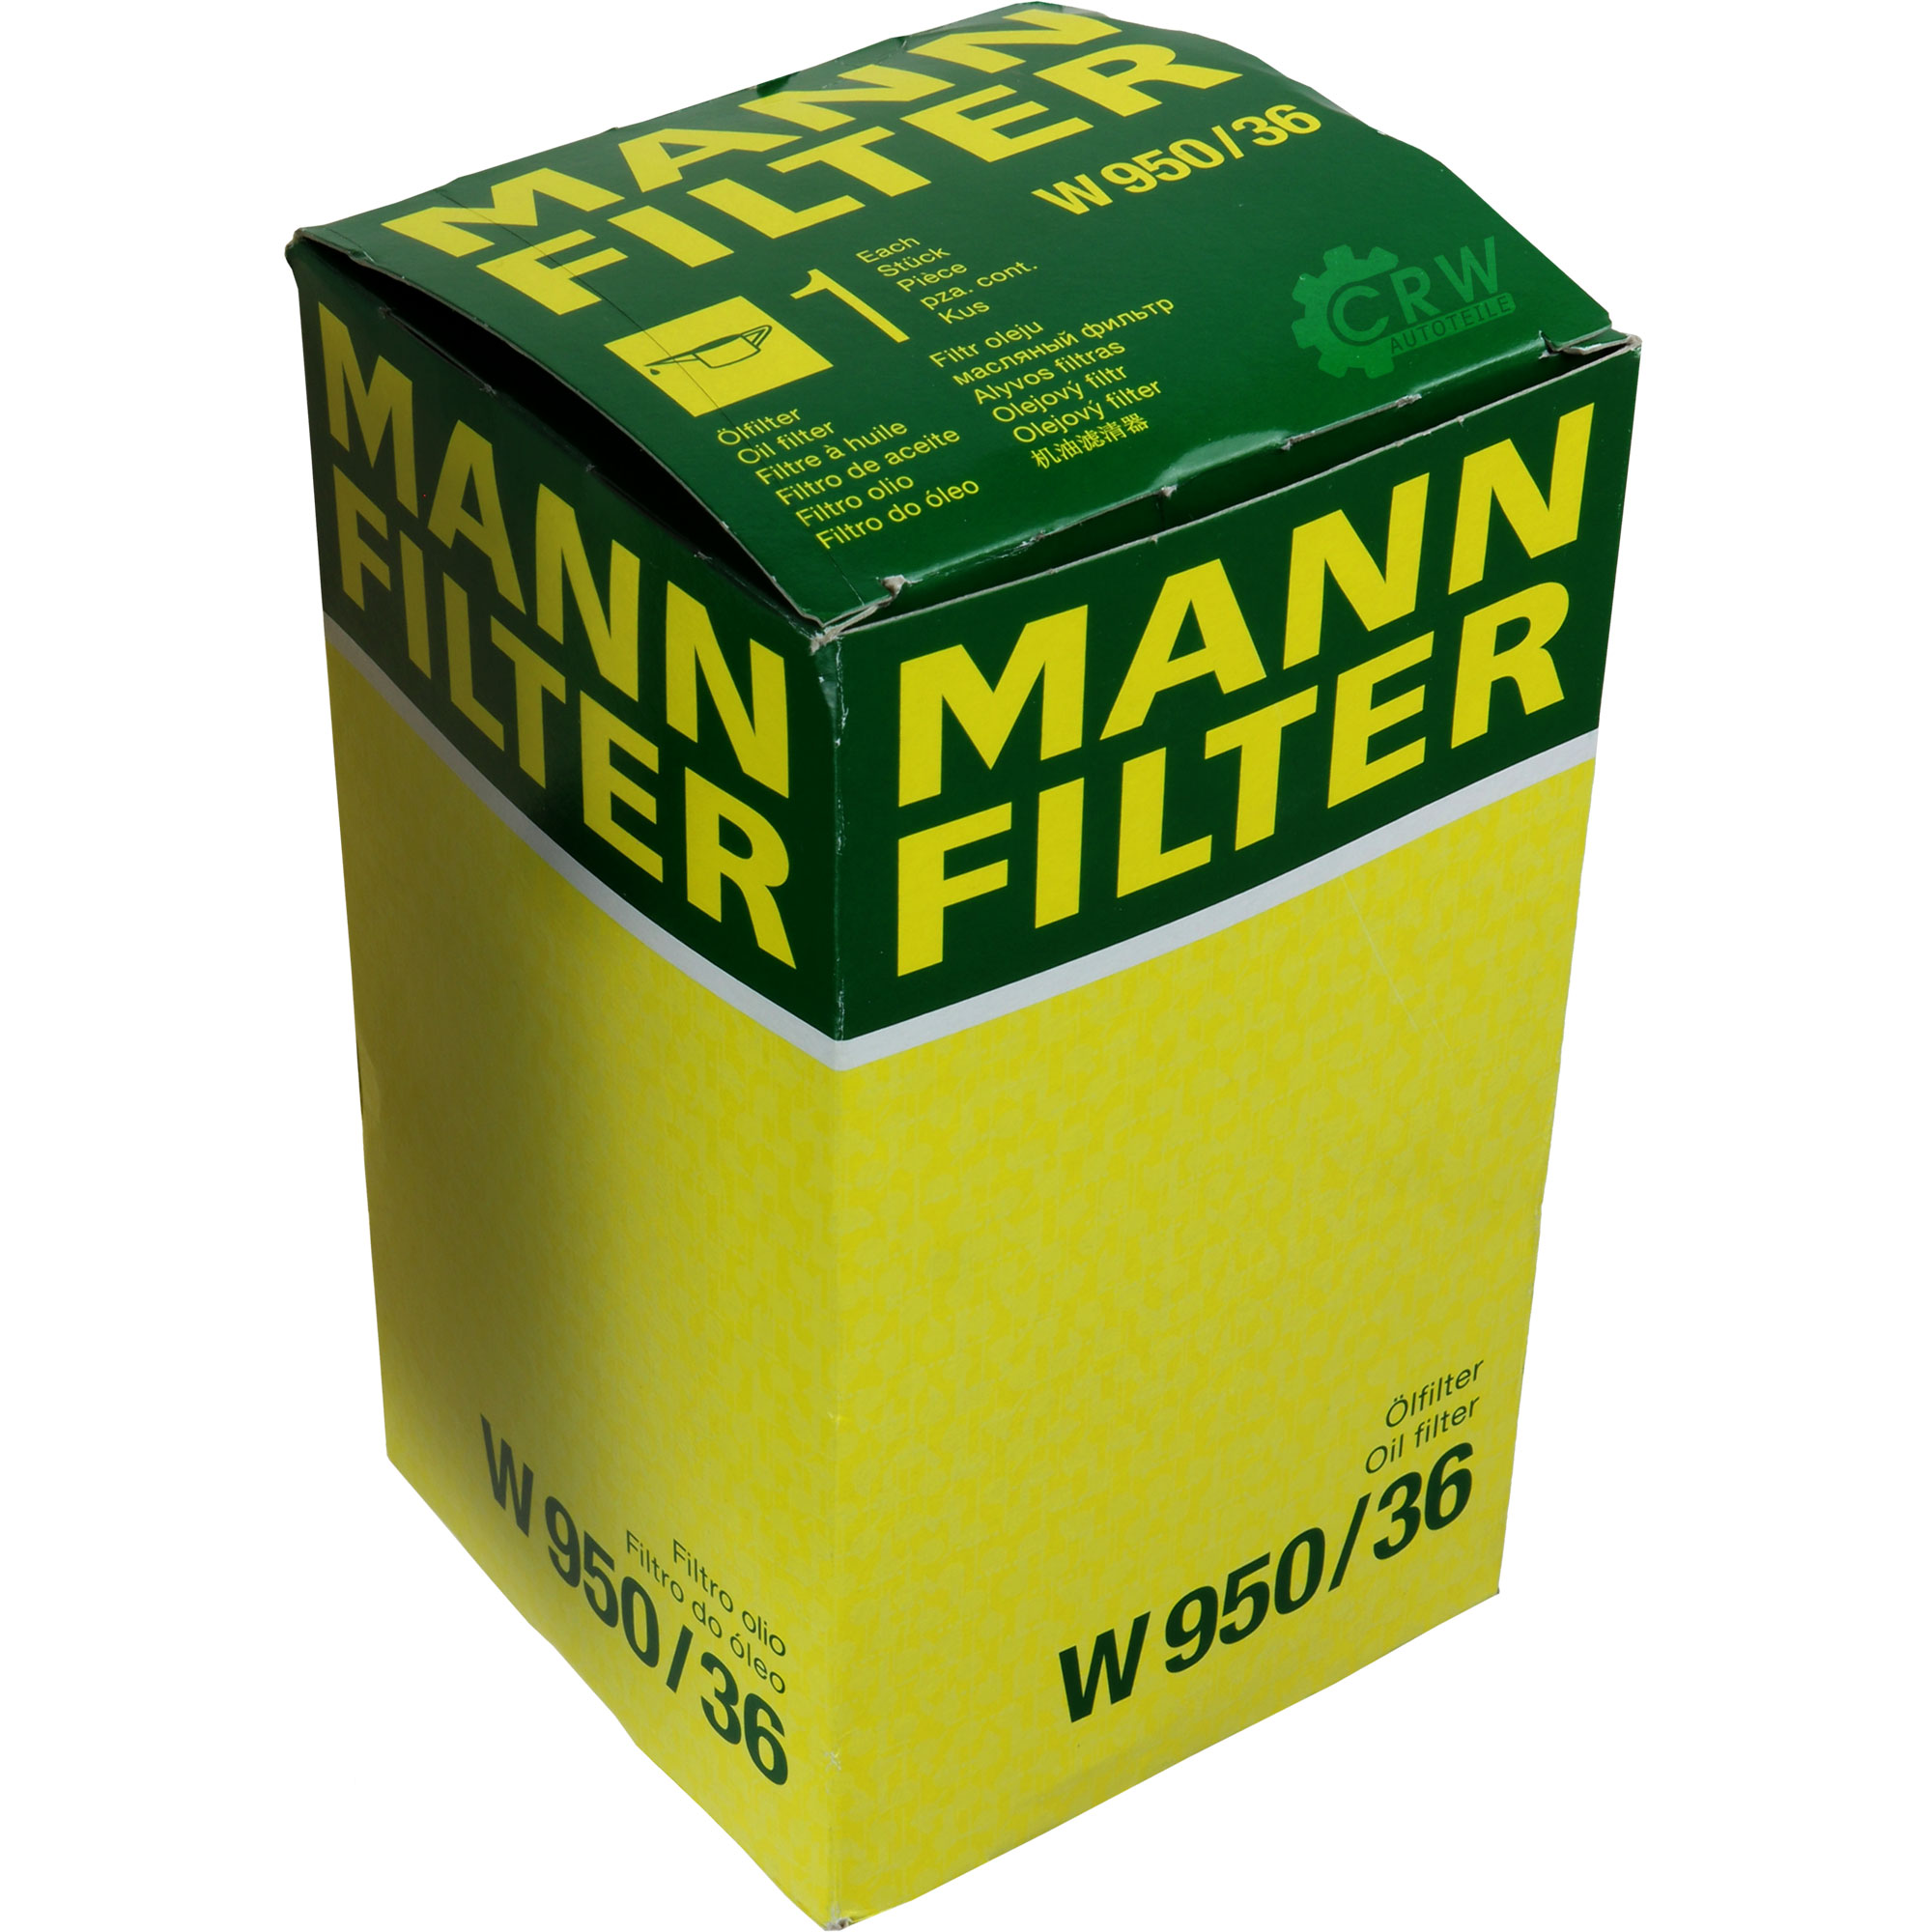 MANN-FILTER Ölfilter Oelfilter W 950/36 Oil Filter